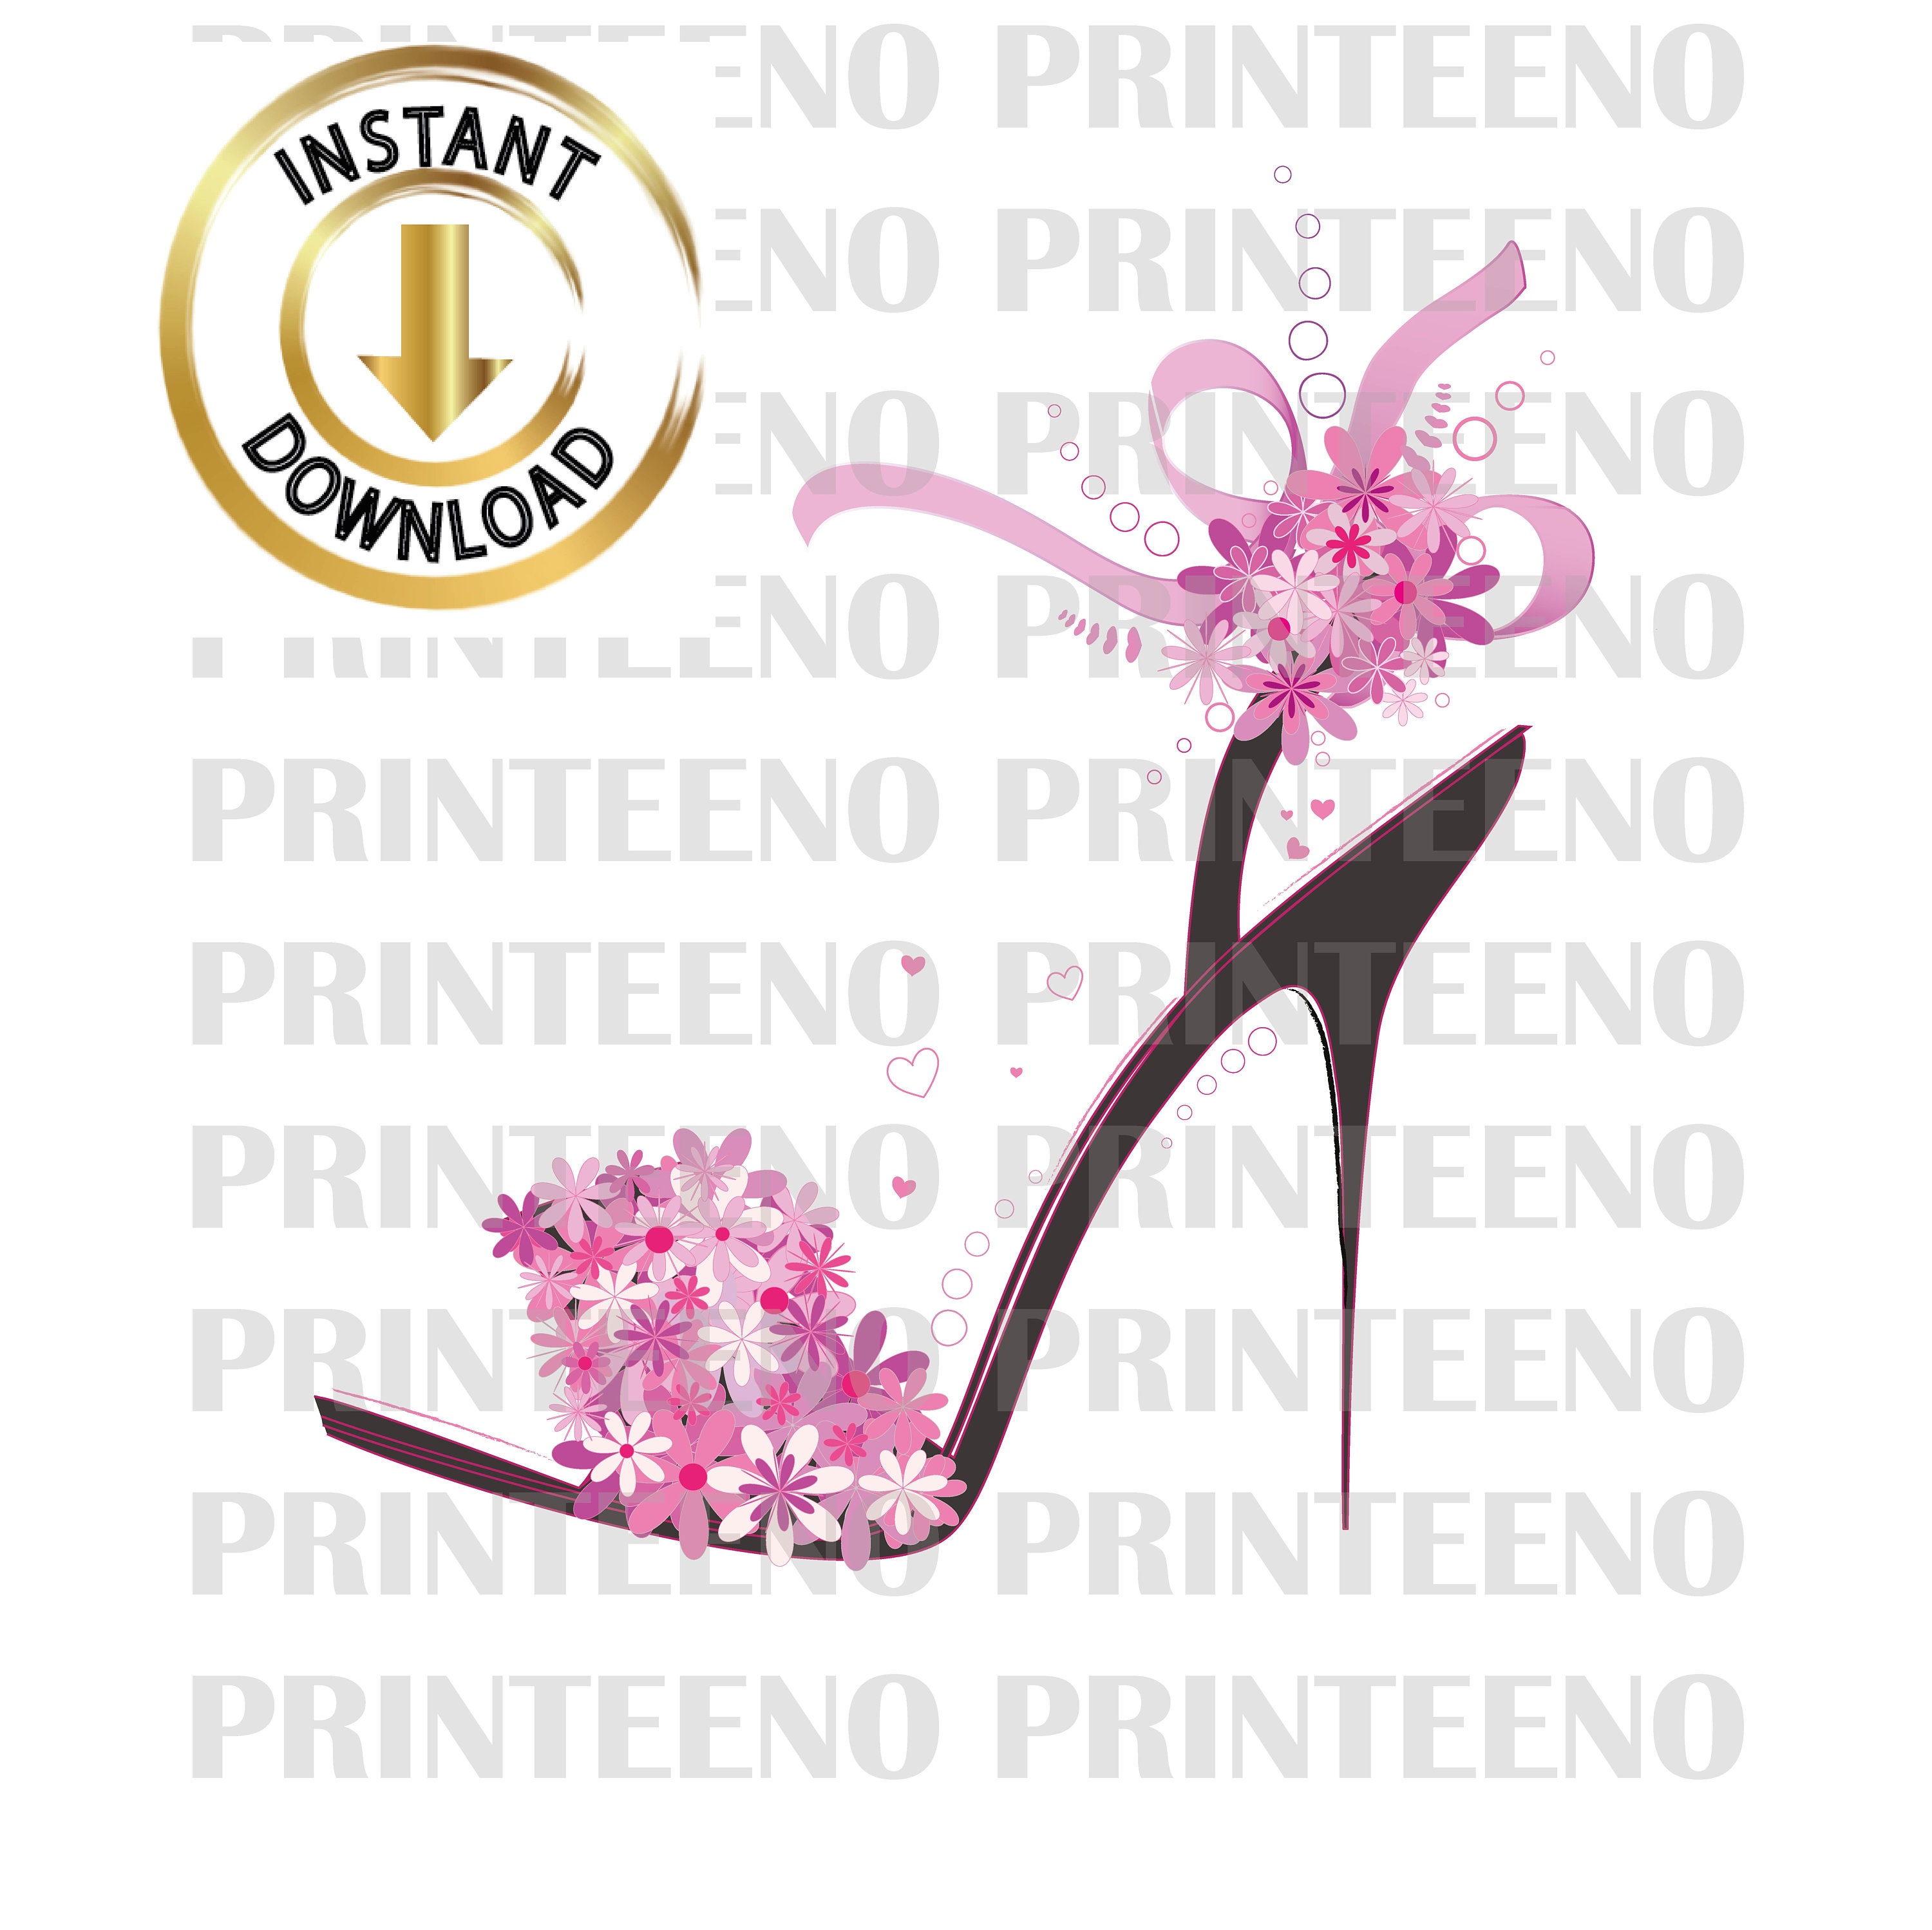 Zapato floral rosa imagen vectorial EPS PNG JPEG tarjetas de - Etsy EspaÃ±a